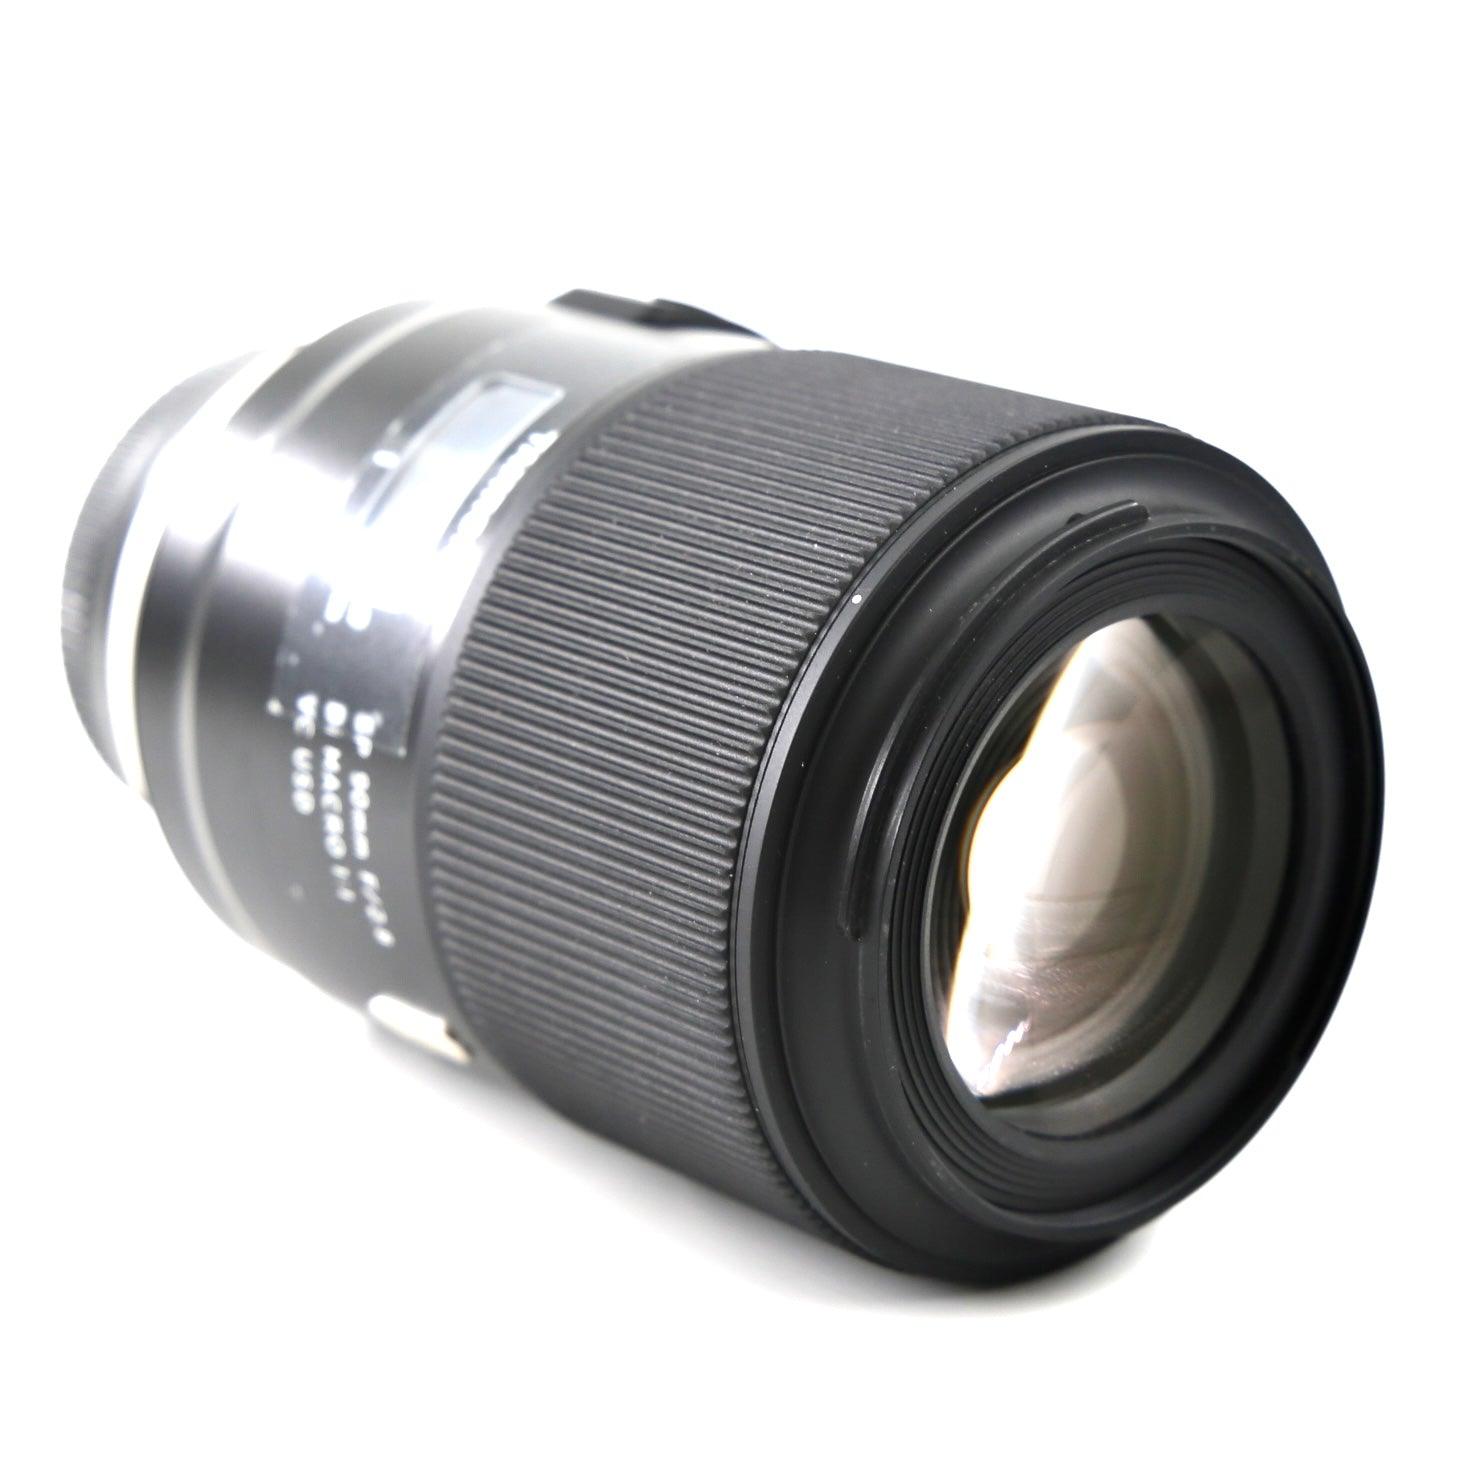 *** REFURB *** Tamron SP 90mm f/2.8 Di Macro 1:1 VC USD Lens for Nikon